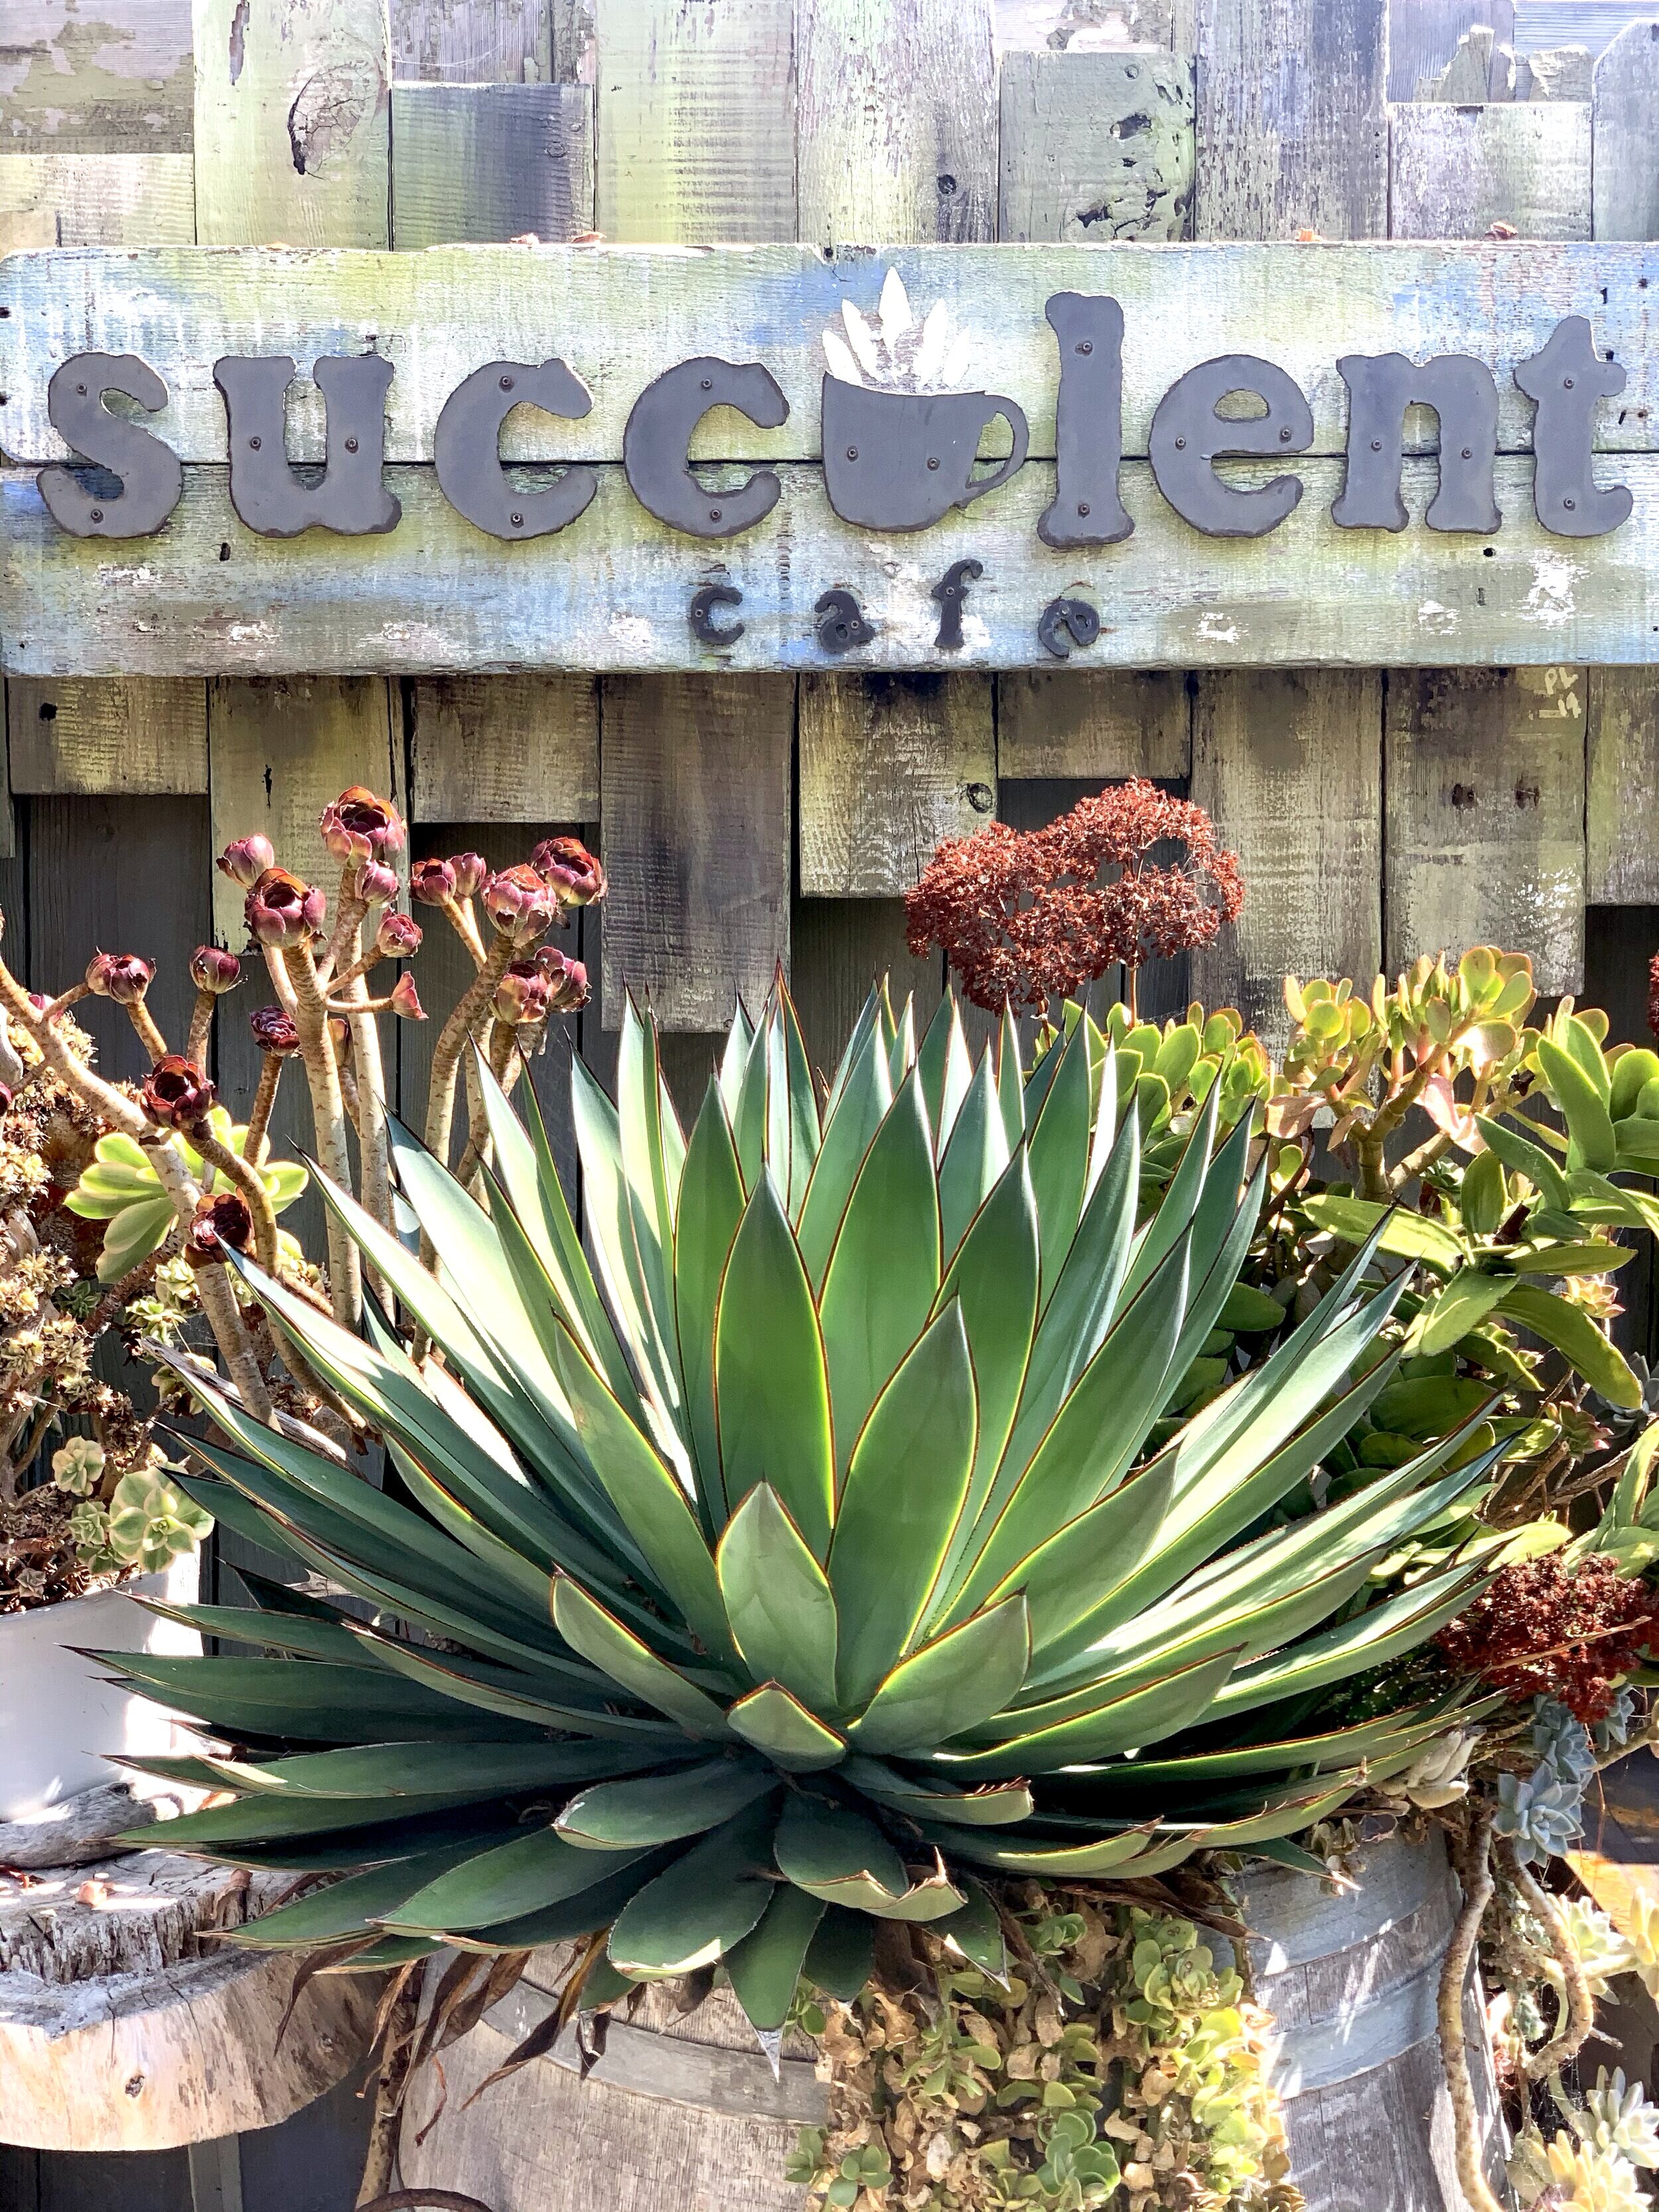 Succulent Cafe